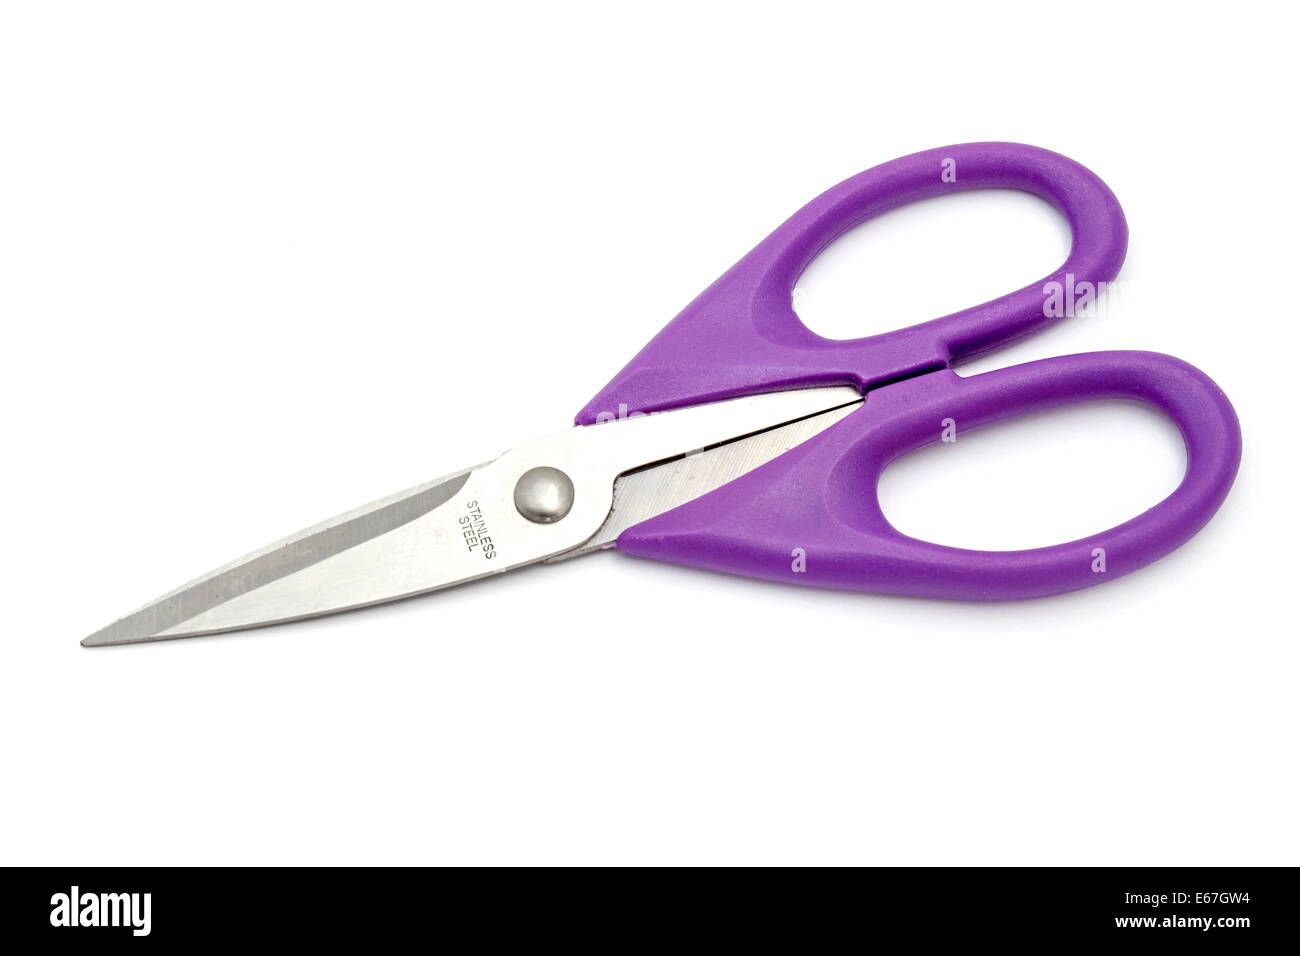 Purple scissors isolated on white background Stock Photo